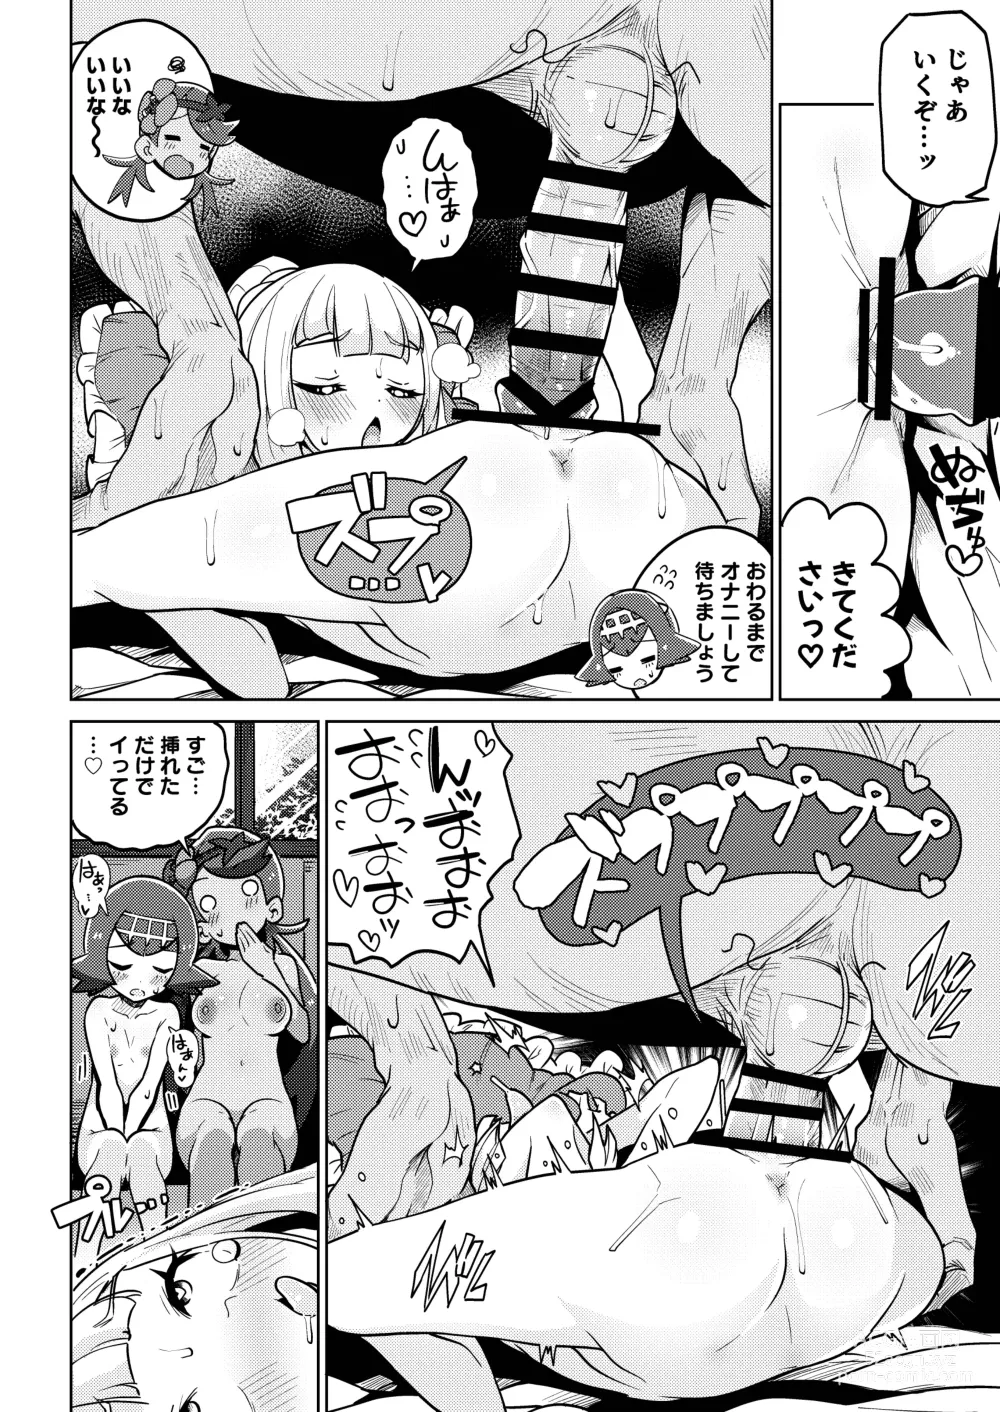 Page 16 of doujinshi POCKET BITCH 2